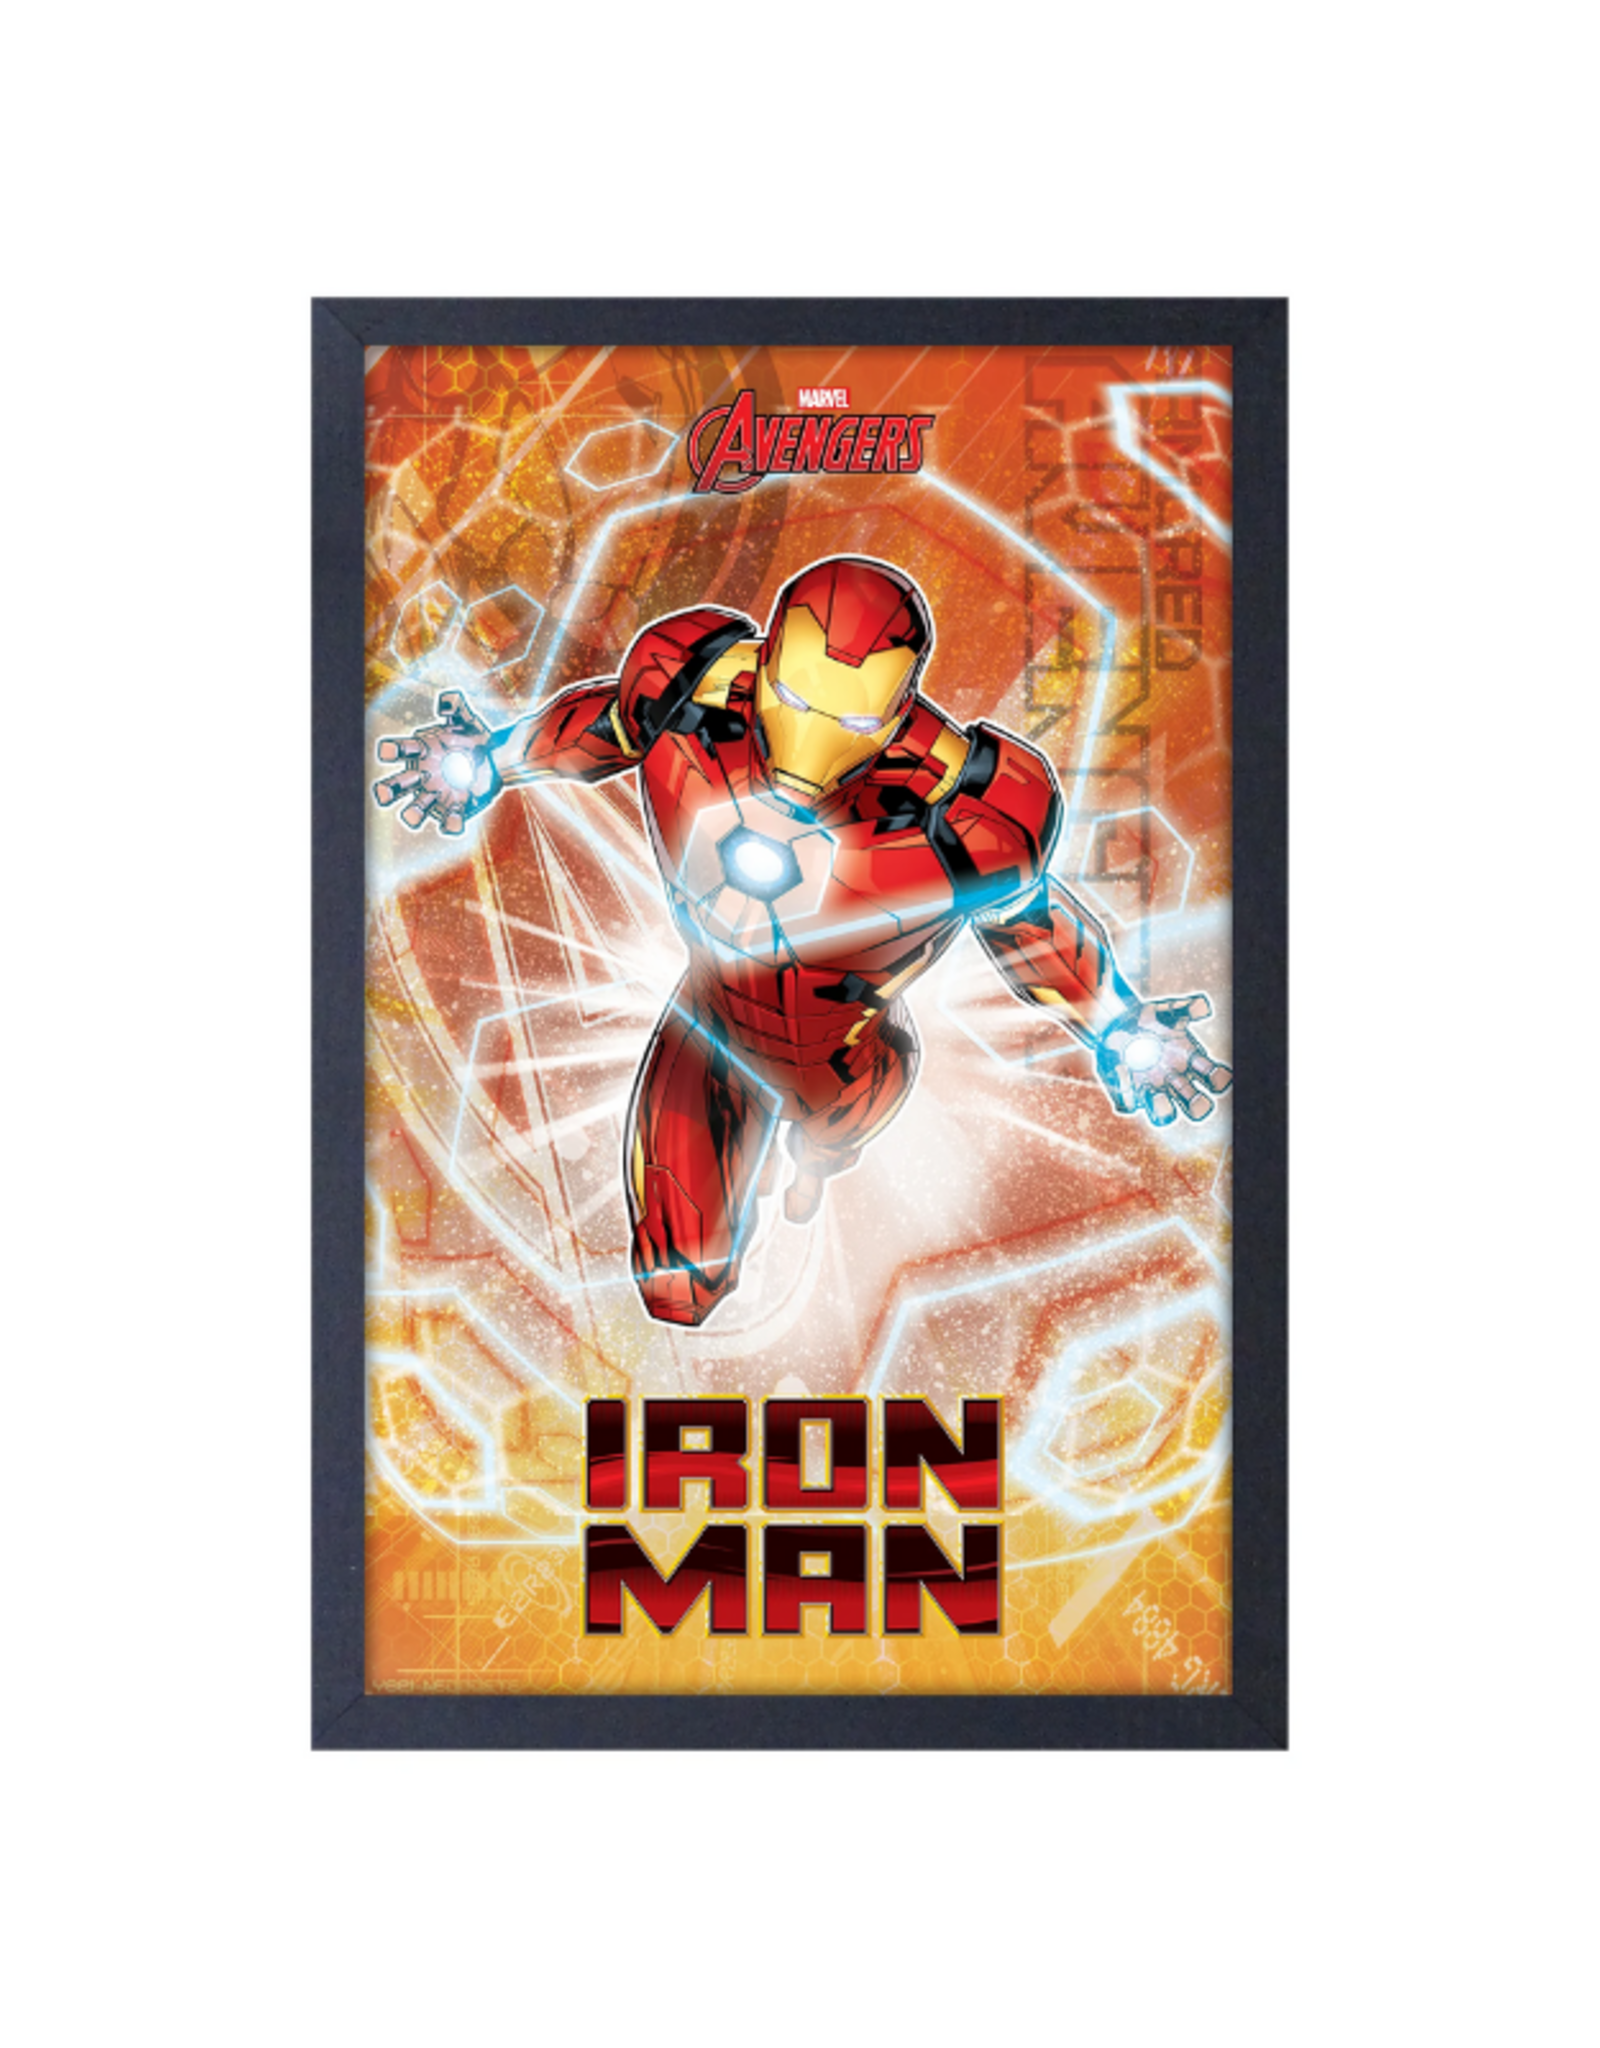 Avengers (Iron Man)